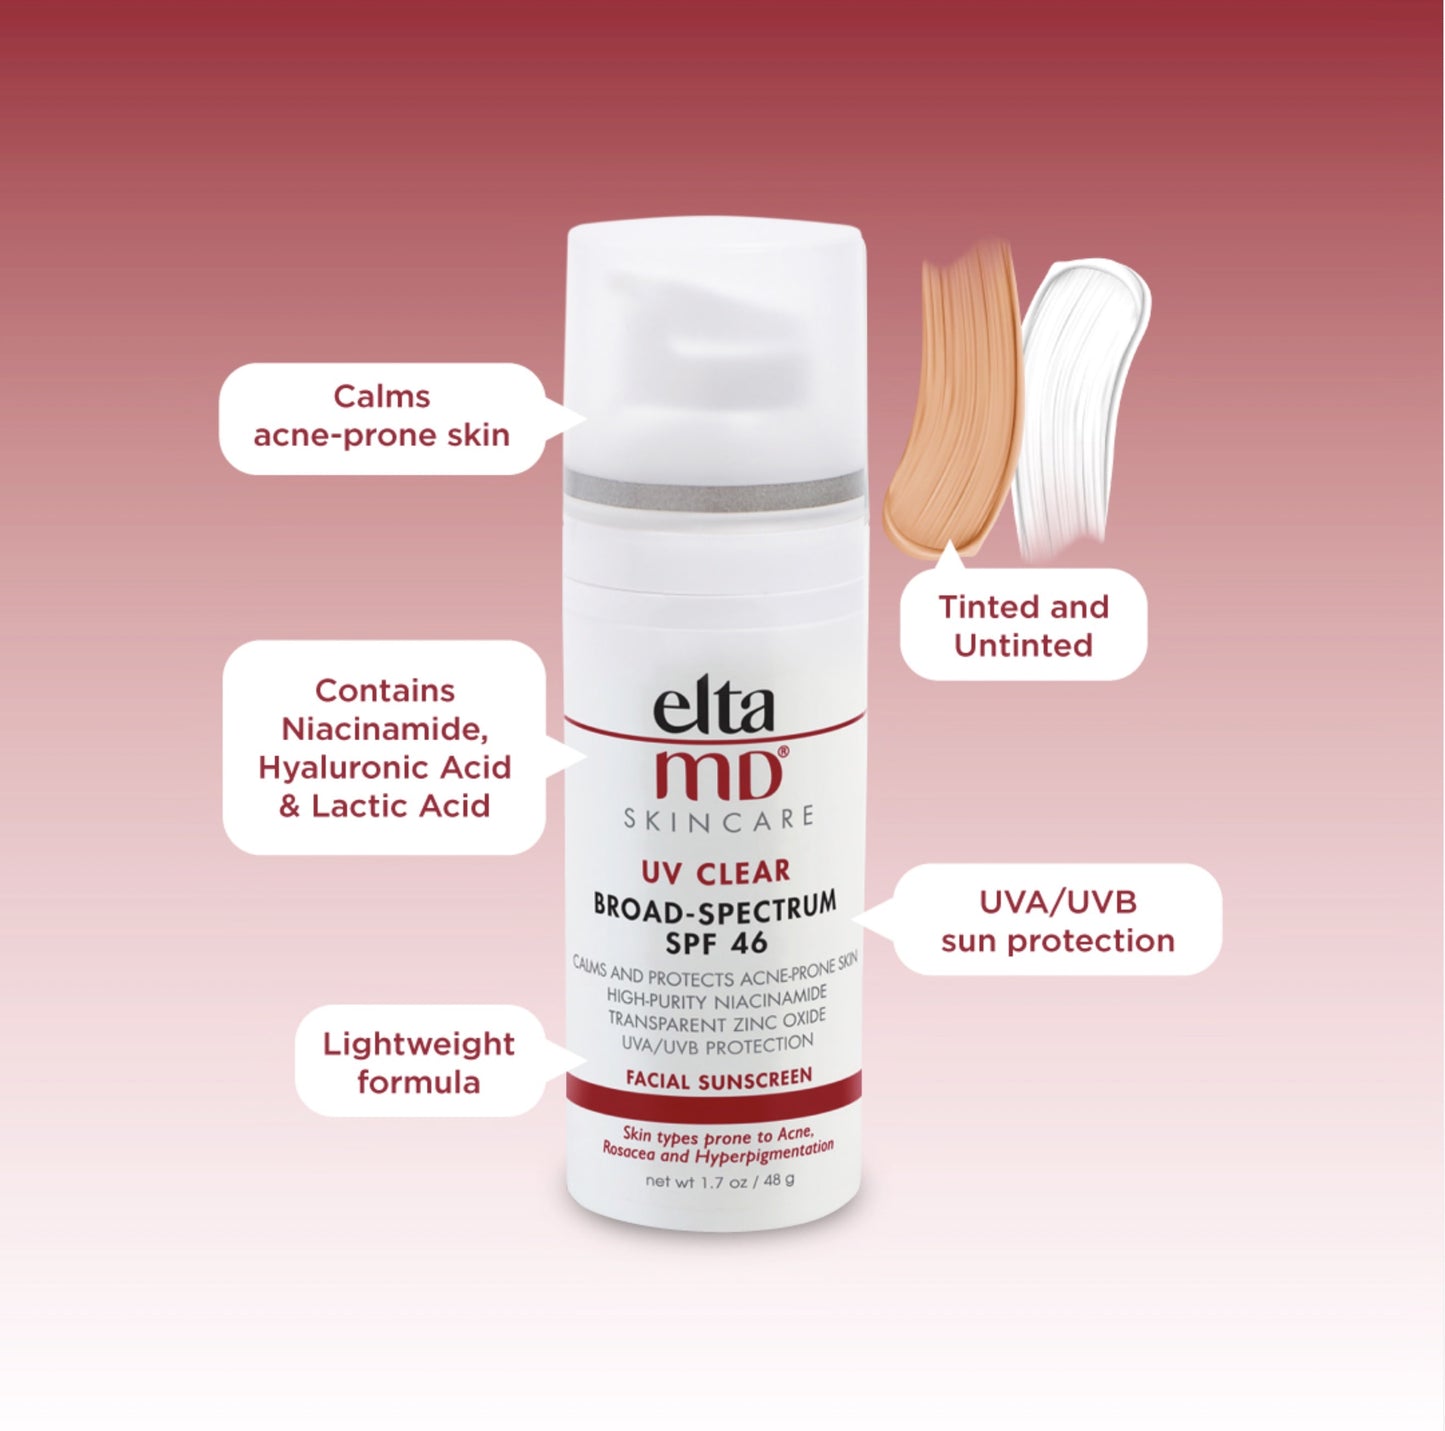 eltamd-uv-clear-sunscreen-dca-advanced-skincare-center